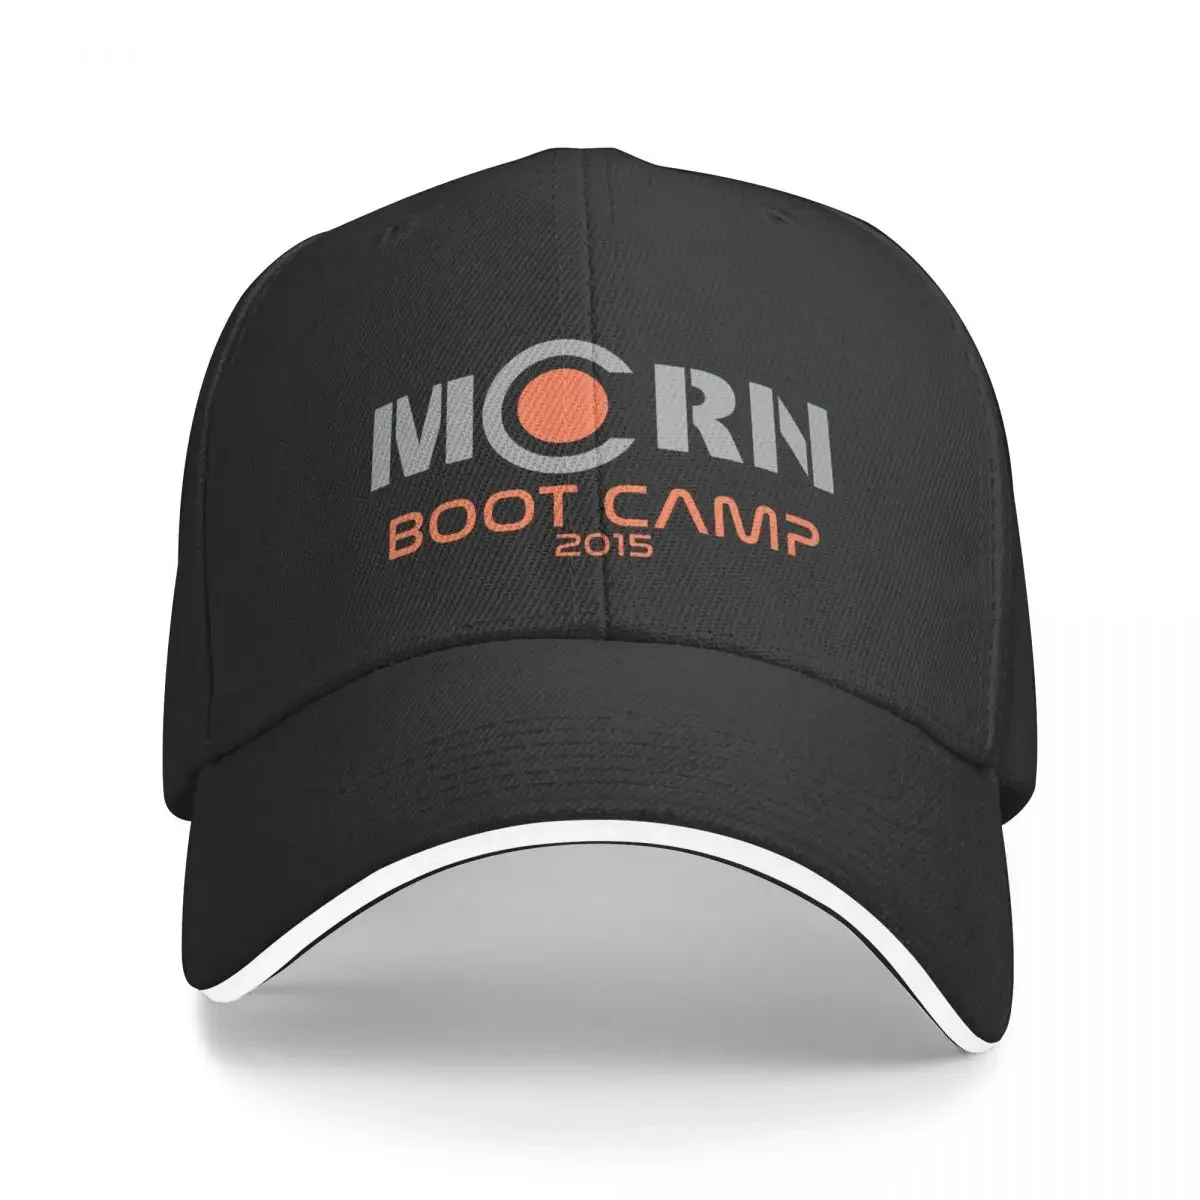 

MCRN - Boot Camp Baseball Cap fashionable Snapback Cap Caps For Women Men's